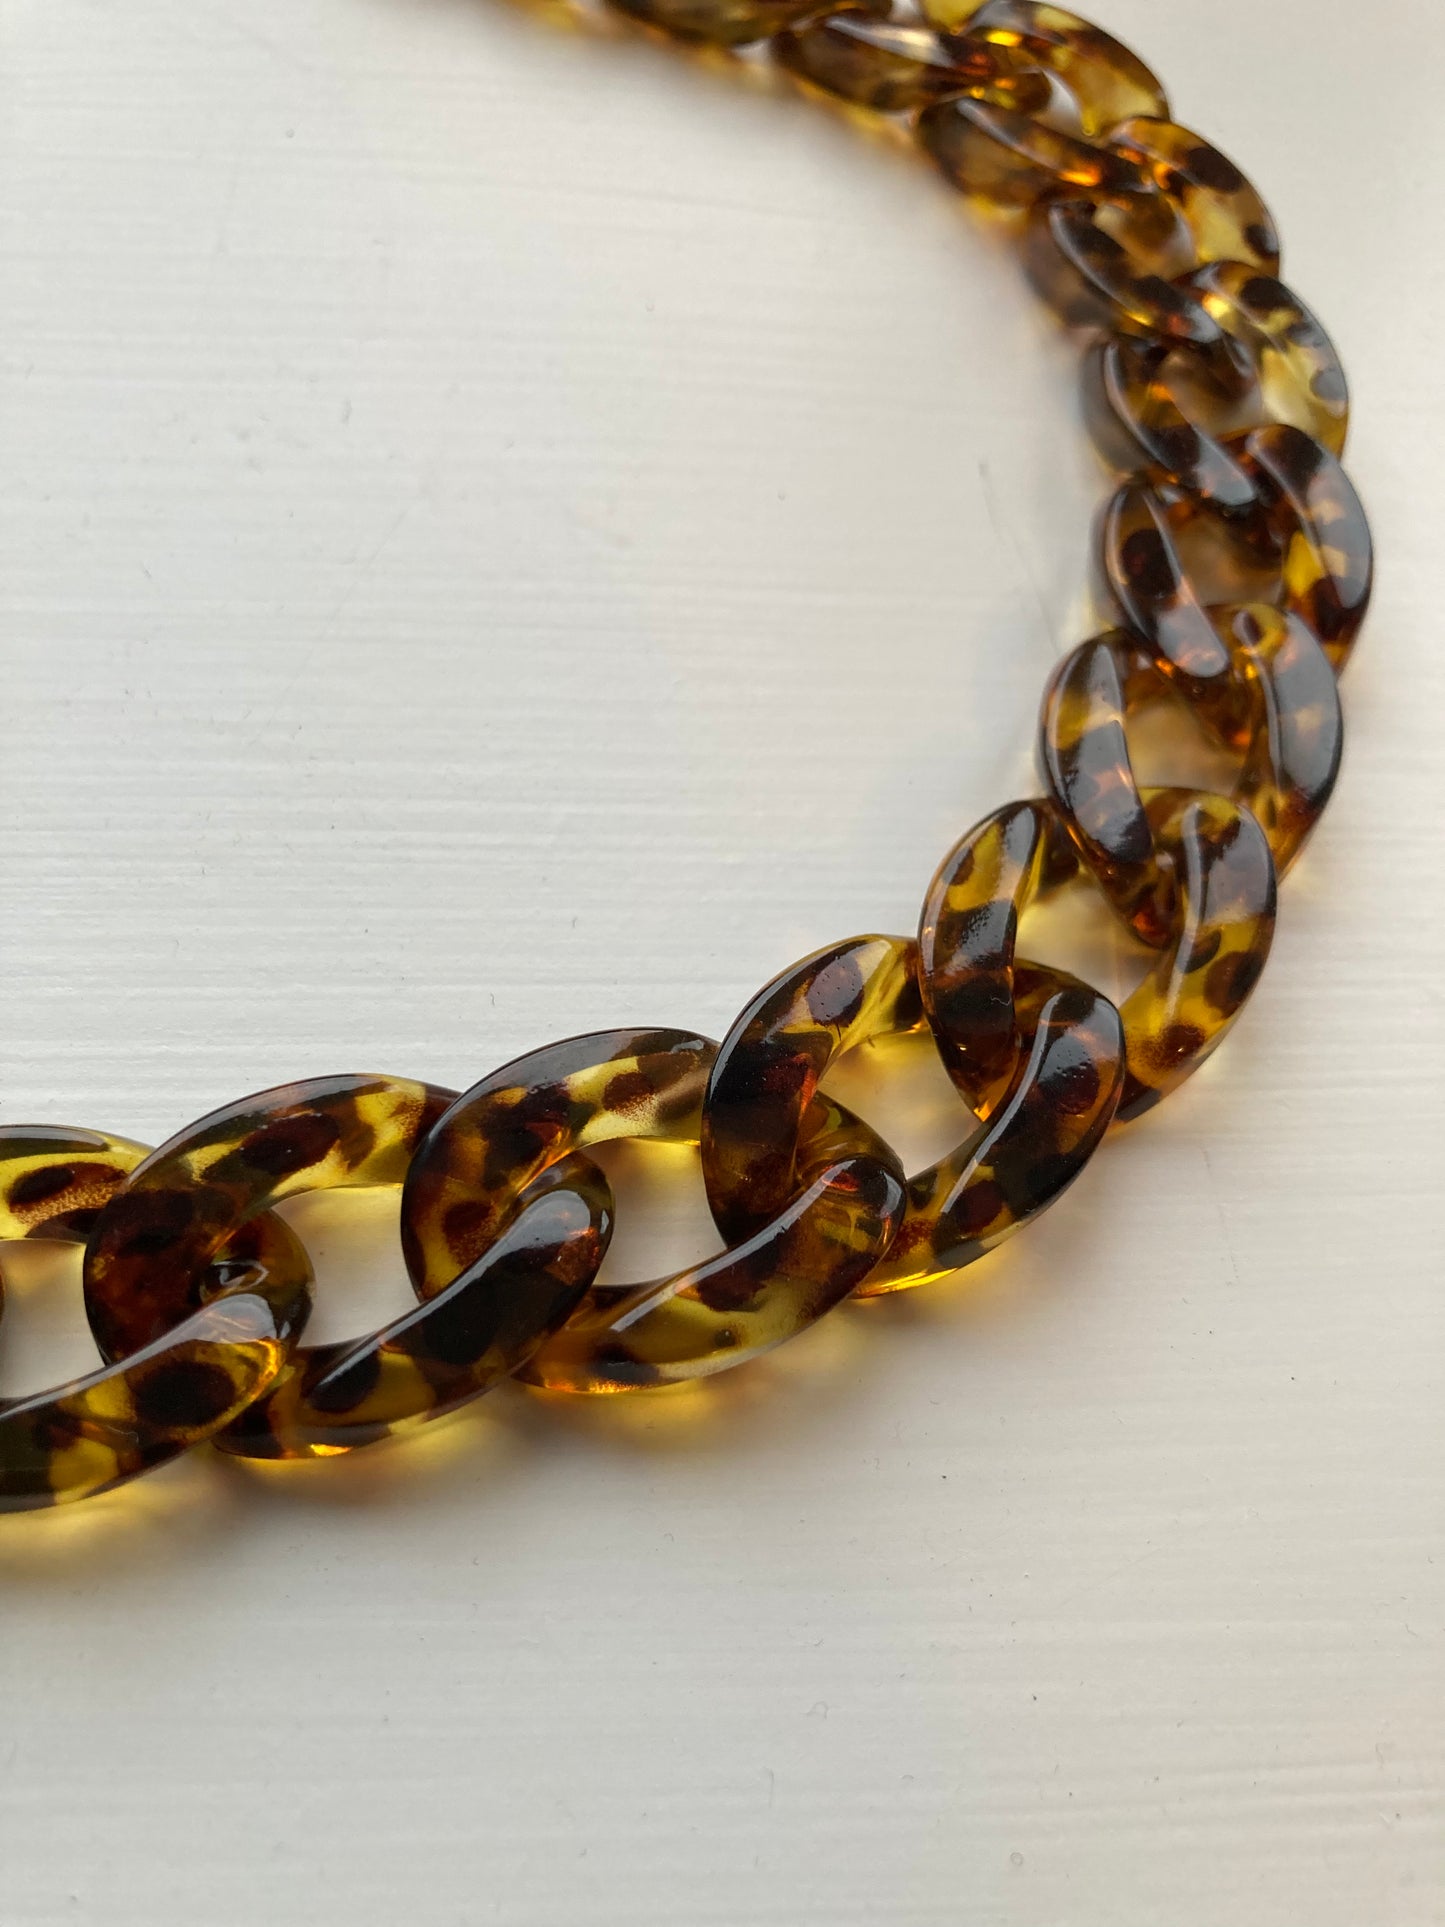 Leopard Acrylic Necklace